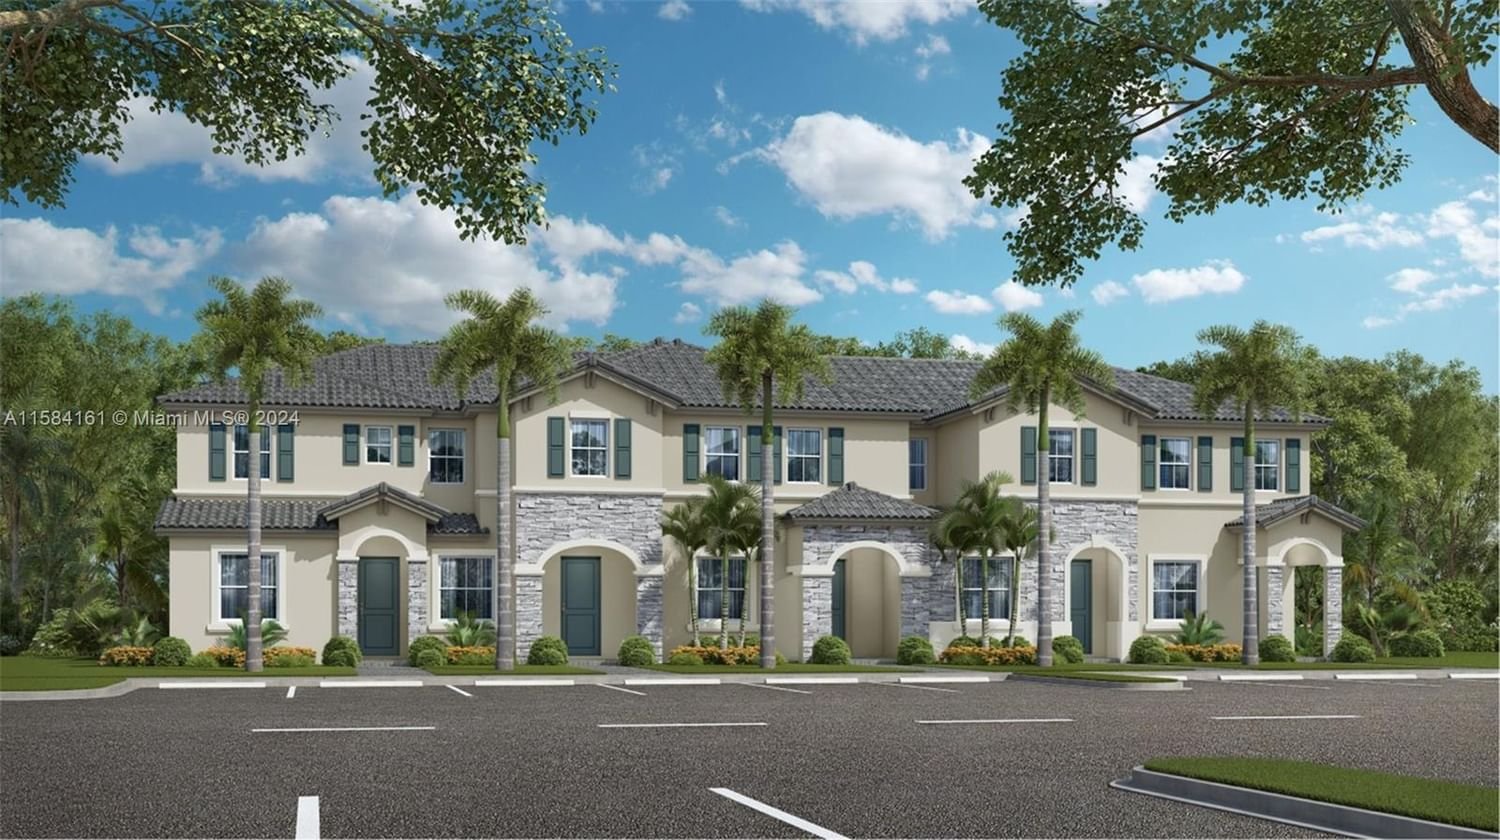 Real estate property located at 29228 163 CT, Miami-Dade County, Cedar Pointe, Homestead, FL